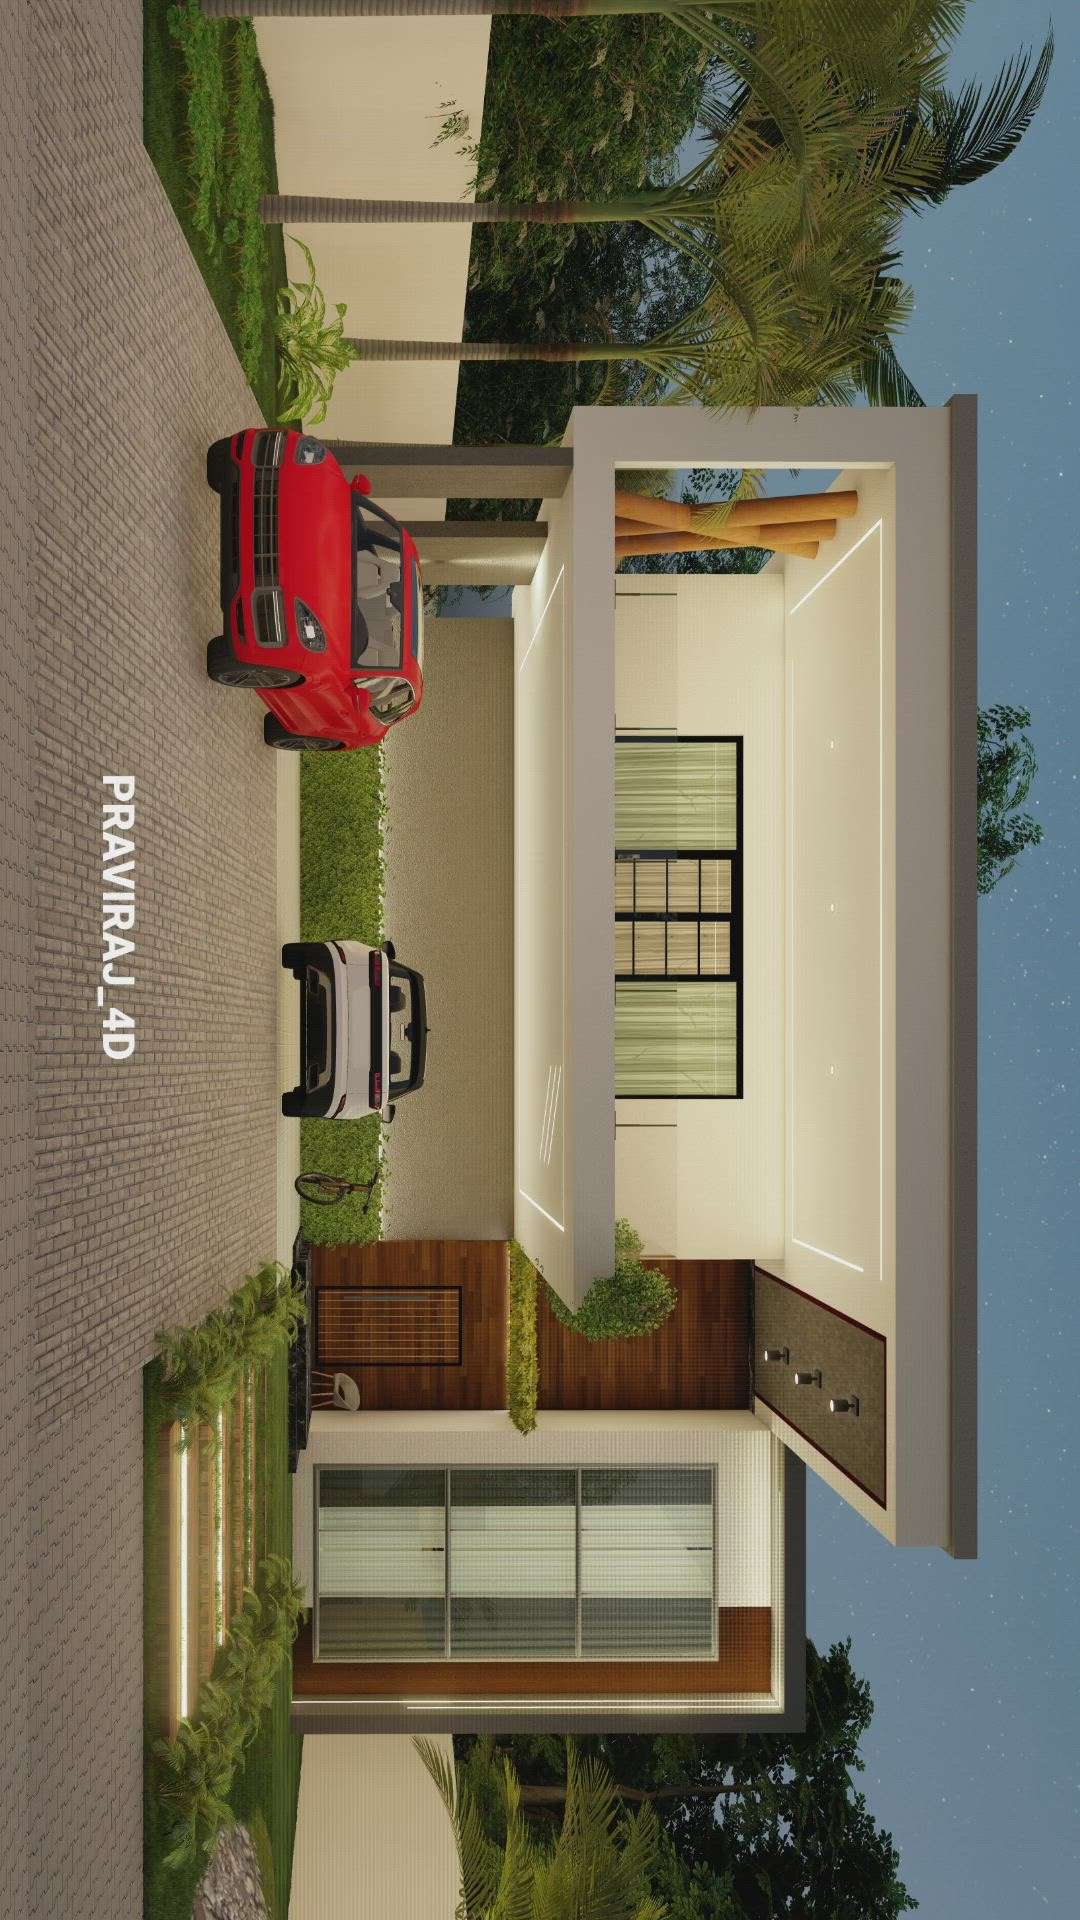 Modern Home Design
Contact us to design 3D elevations for your plan
(നിങ്ങളുടെ കയ്യിലുള്ള പ്ലാൻ അനുസരിച്ചുള്ള 3D_ഡിസൈൻ ചെയ്യാൻ contact ചെയ്യൂ.. )
👉📱:8921402392
👉📧: praviraj4d@gmail.com
.
.
.
.
.
 #3D_ELEVATION  #modernhousedesigns  #modernarchitect  #3Darchitecture  #House_design #luxuryvillas  #3d_designs
#Indianhome #kerala #interiordesign #architecture #keralahomes #budgethome #keralainteriordesign #Indianarchitecture #keralahomedesigns #keralahousedesign #keralahouses #architect #home #3ddesign #homedesignideas #homeelevation #Modernhome #dreamhome #Archlove#3drender #exteriordesigns #architectural #contemporaryhomedesign #Lumion #keralahomeplaners #keralaarchidesign#budgethome #3dhomeelevation #residence #architects #keralaarchitectures